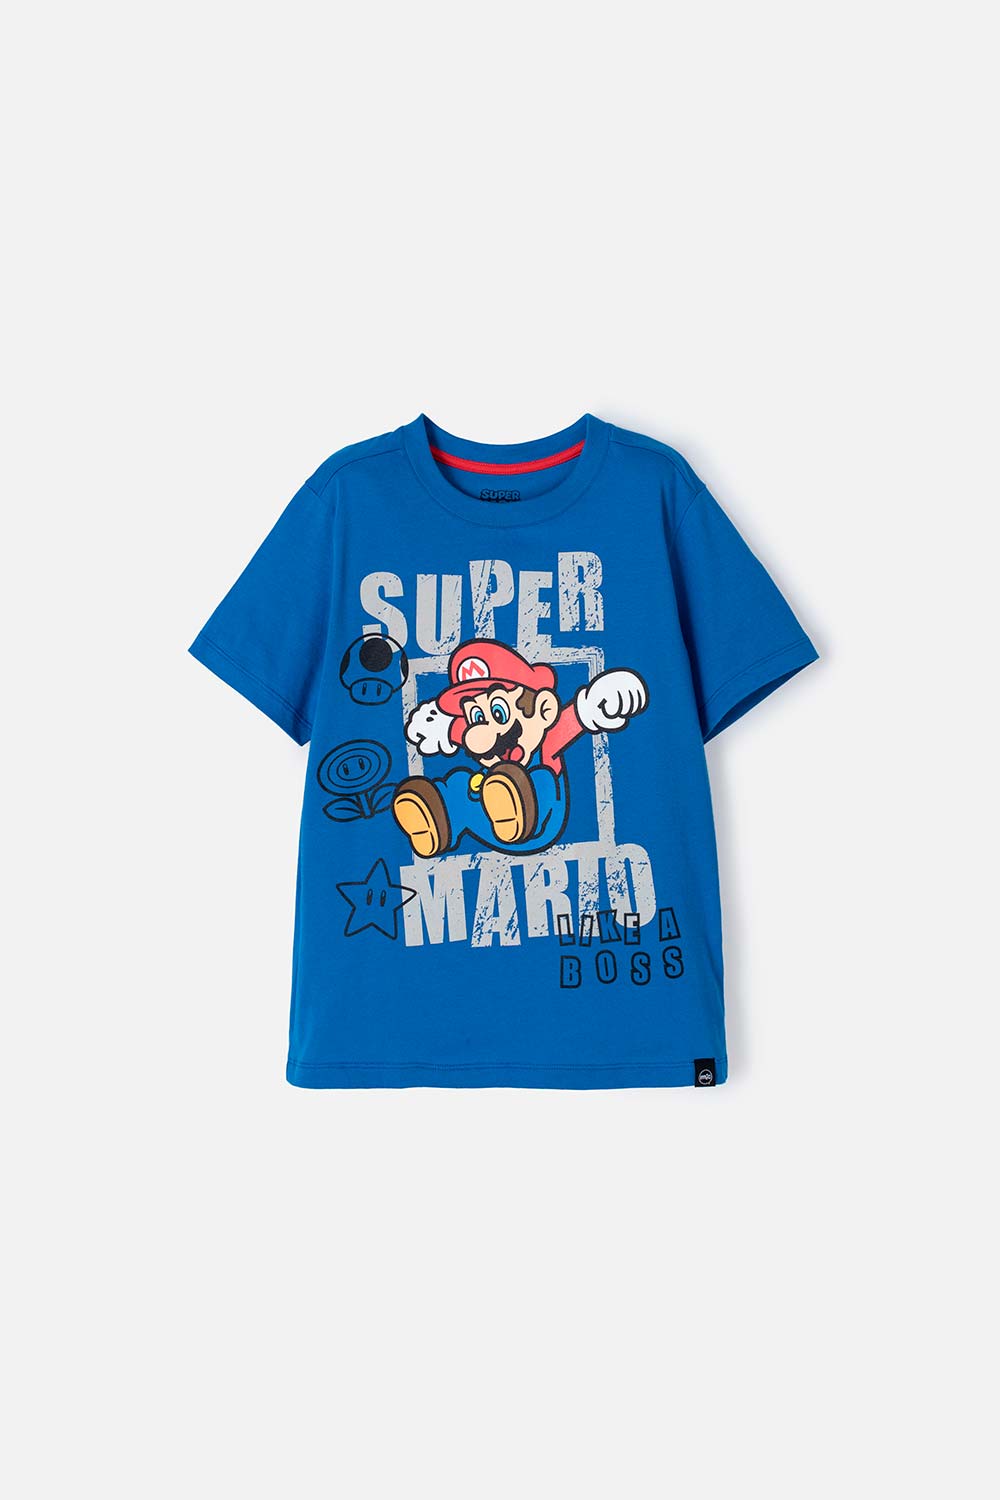 Camiseta de Mario Bros azul estampada en frente para niño 12-0